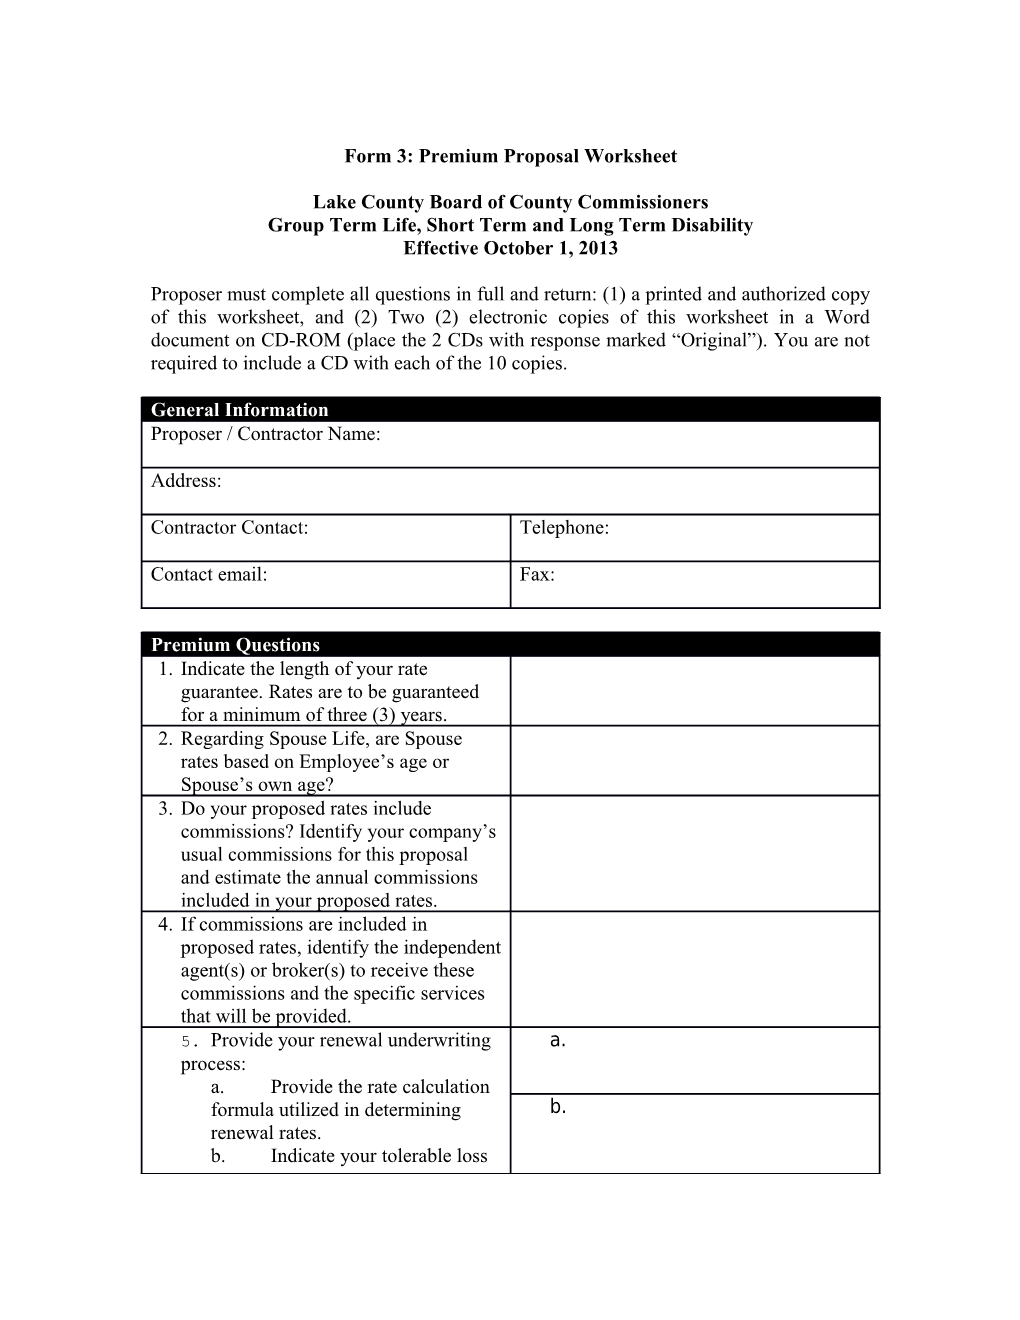 Form 3: Premium Proposal Worksheet